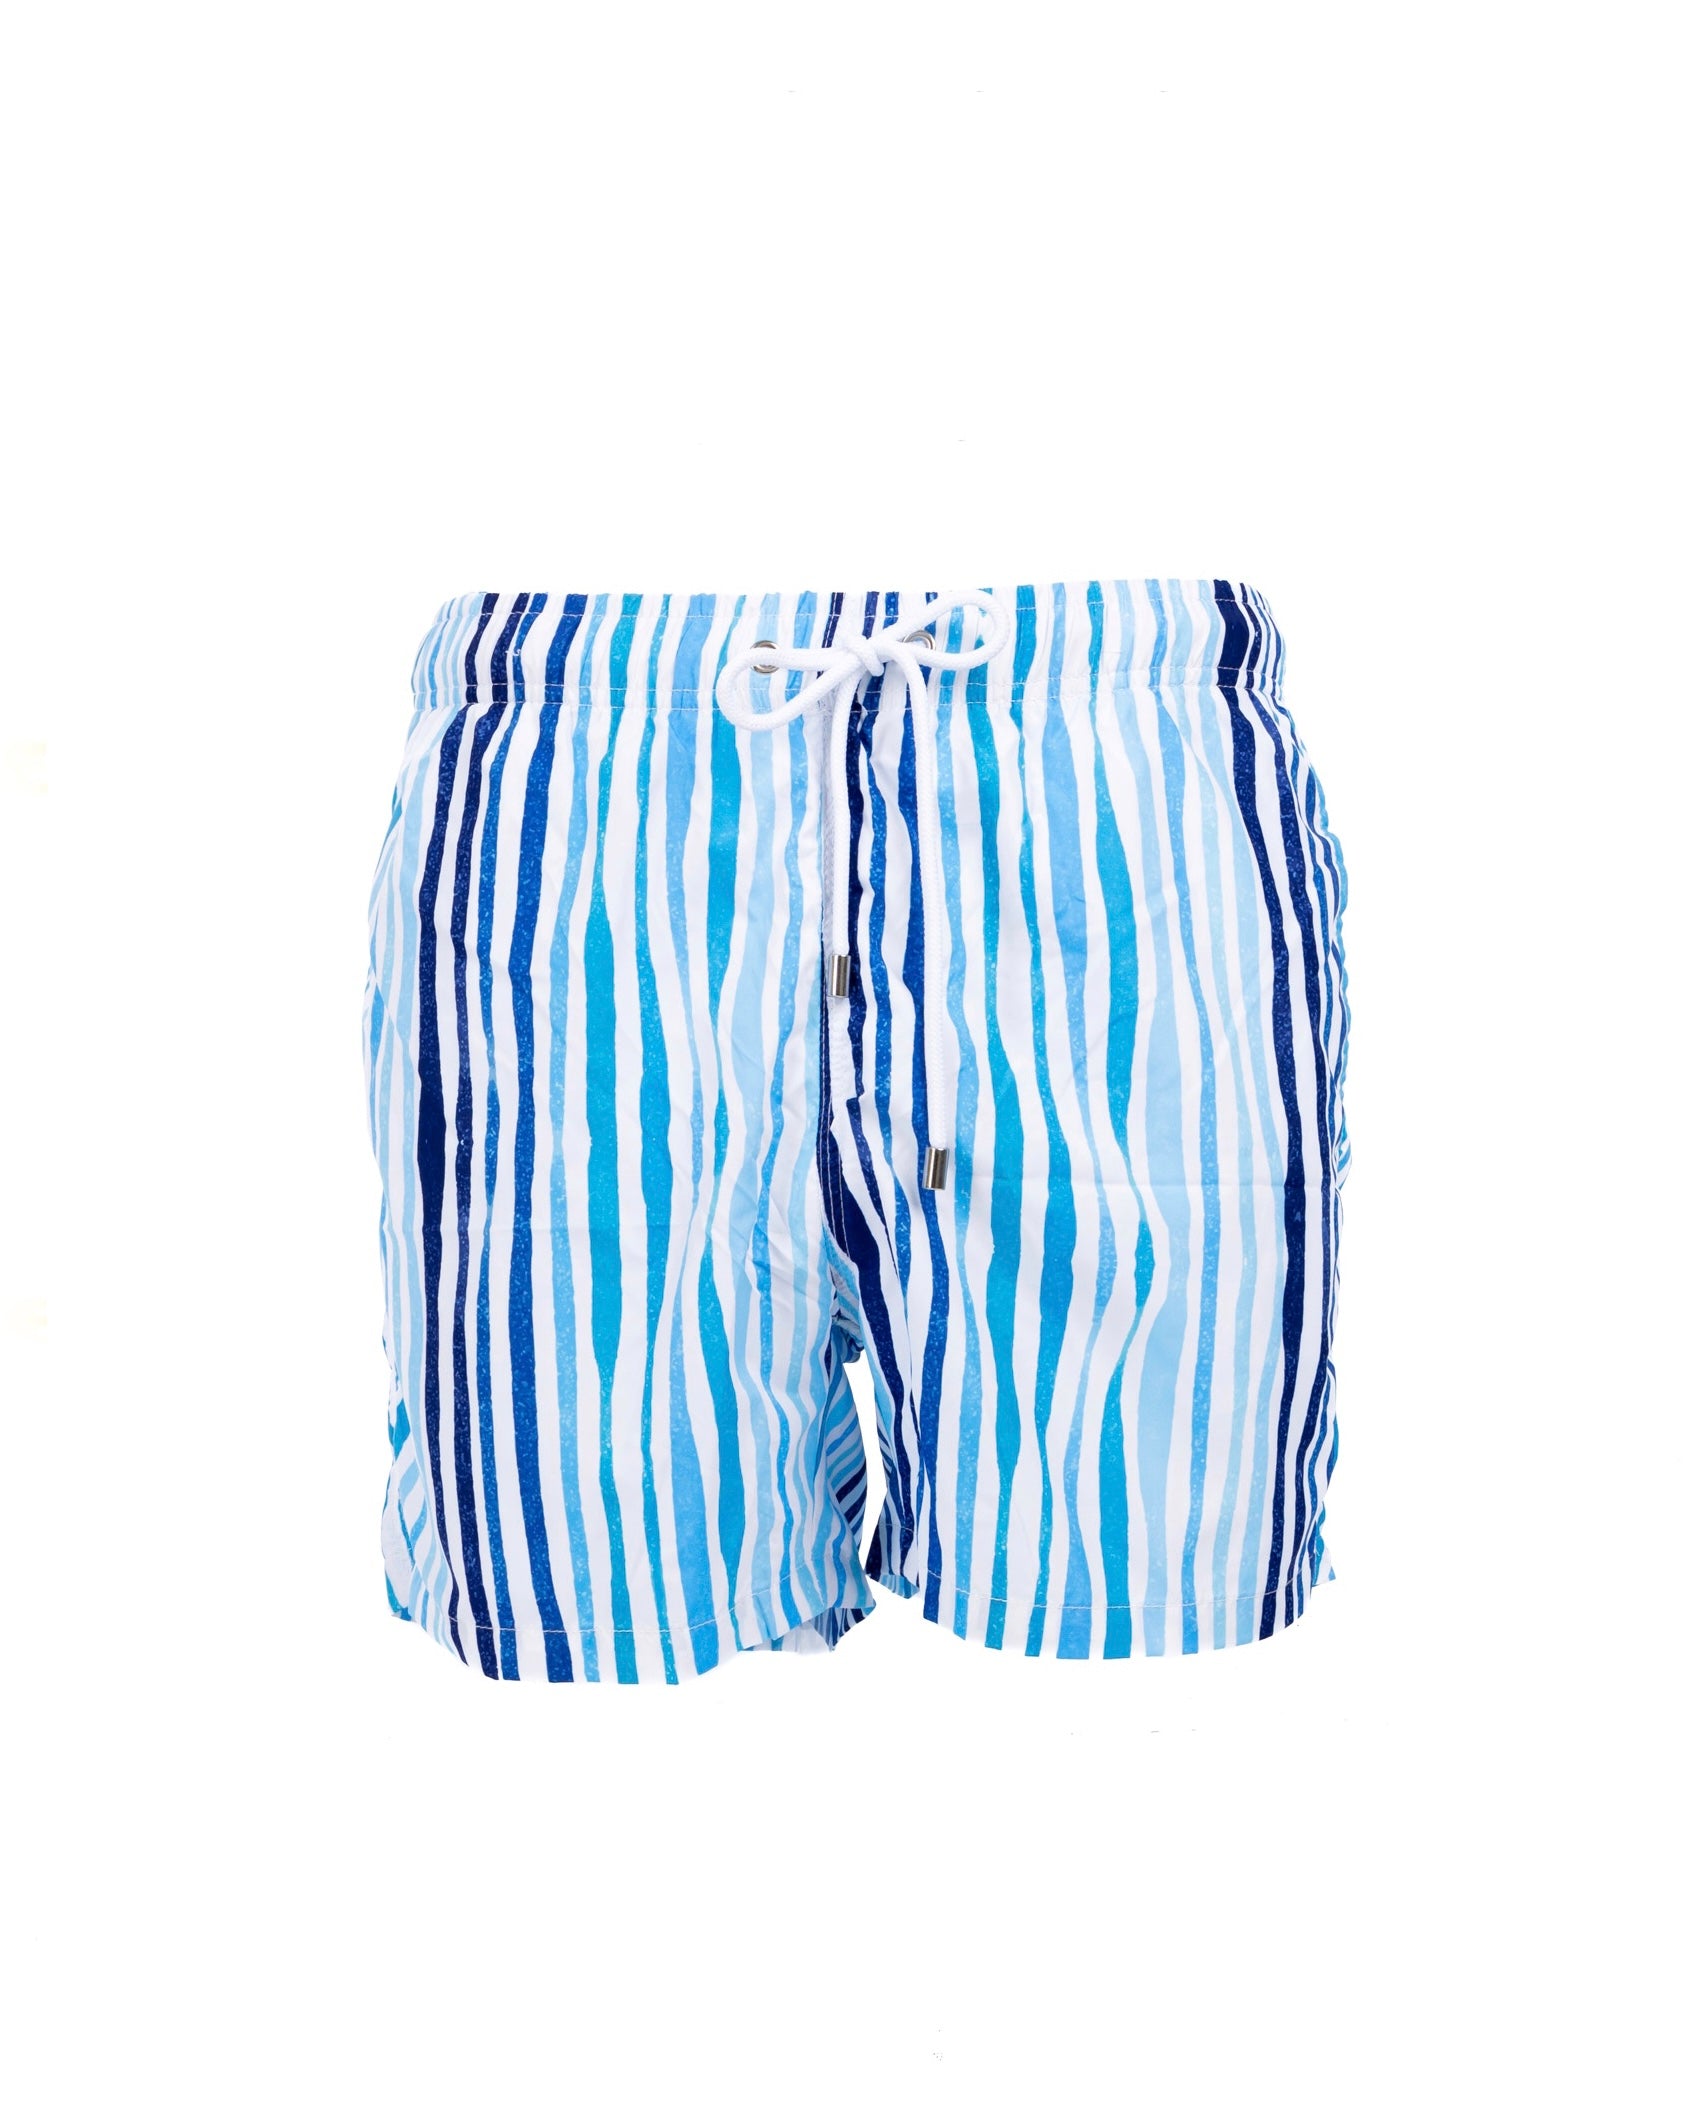 Stripe - maillot de bain bleu clair à motifs